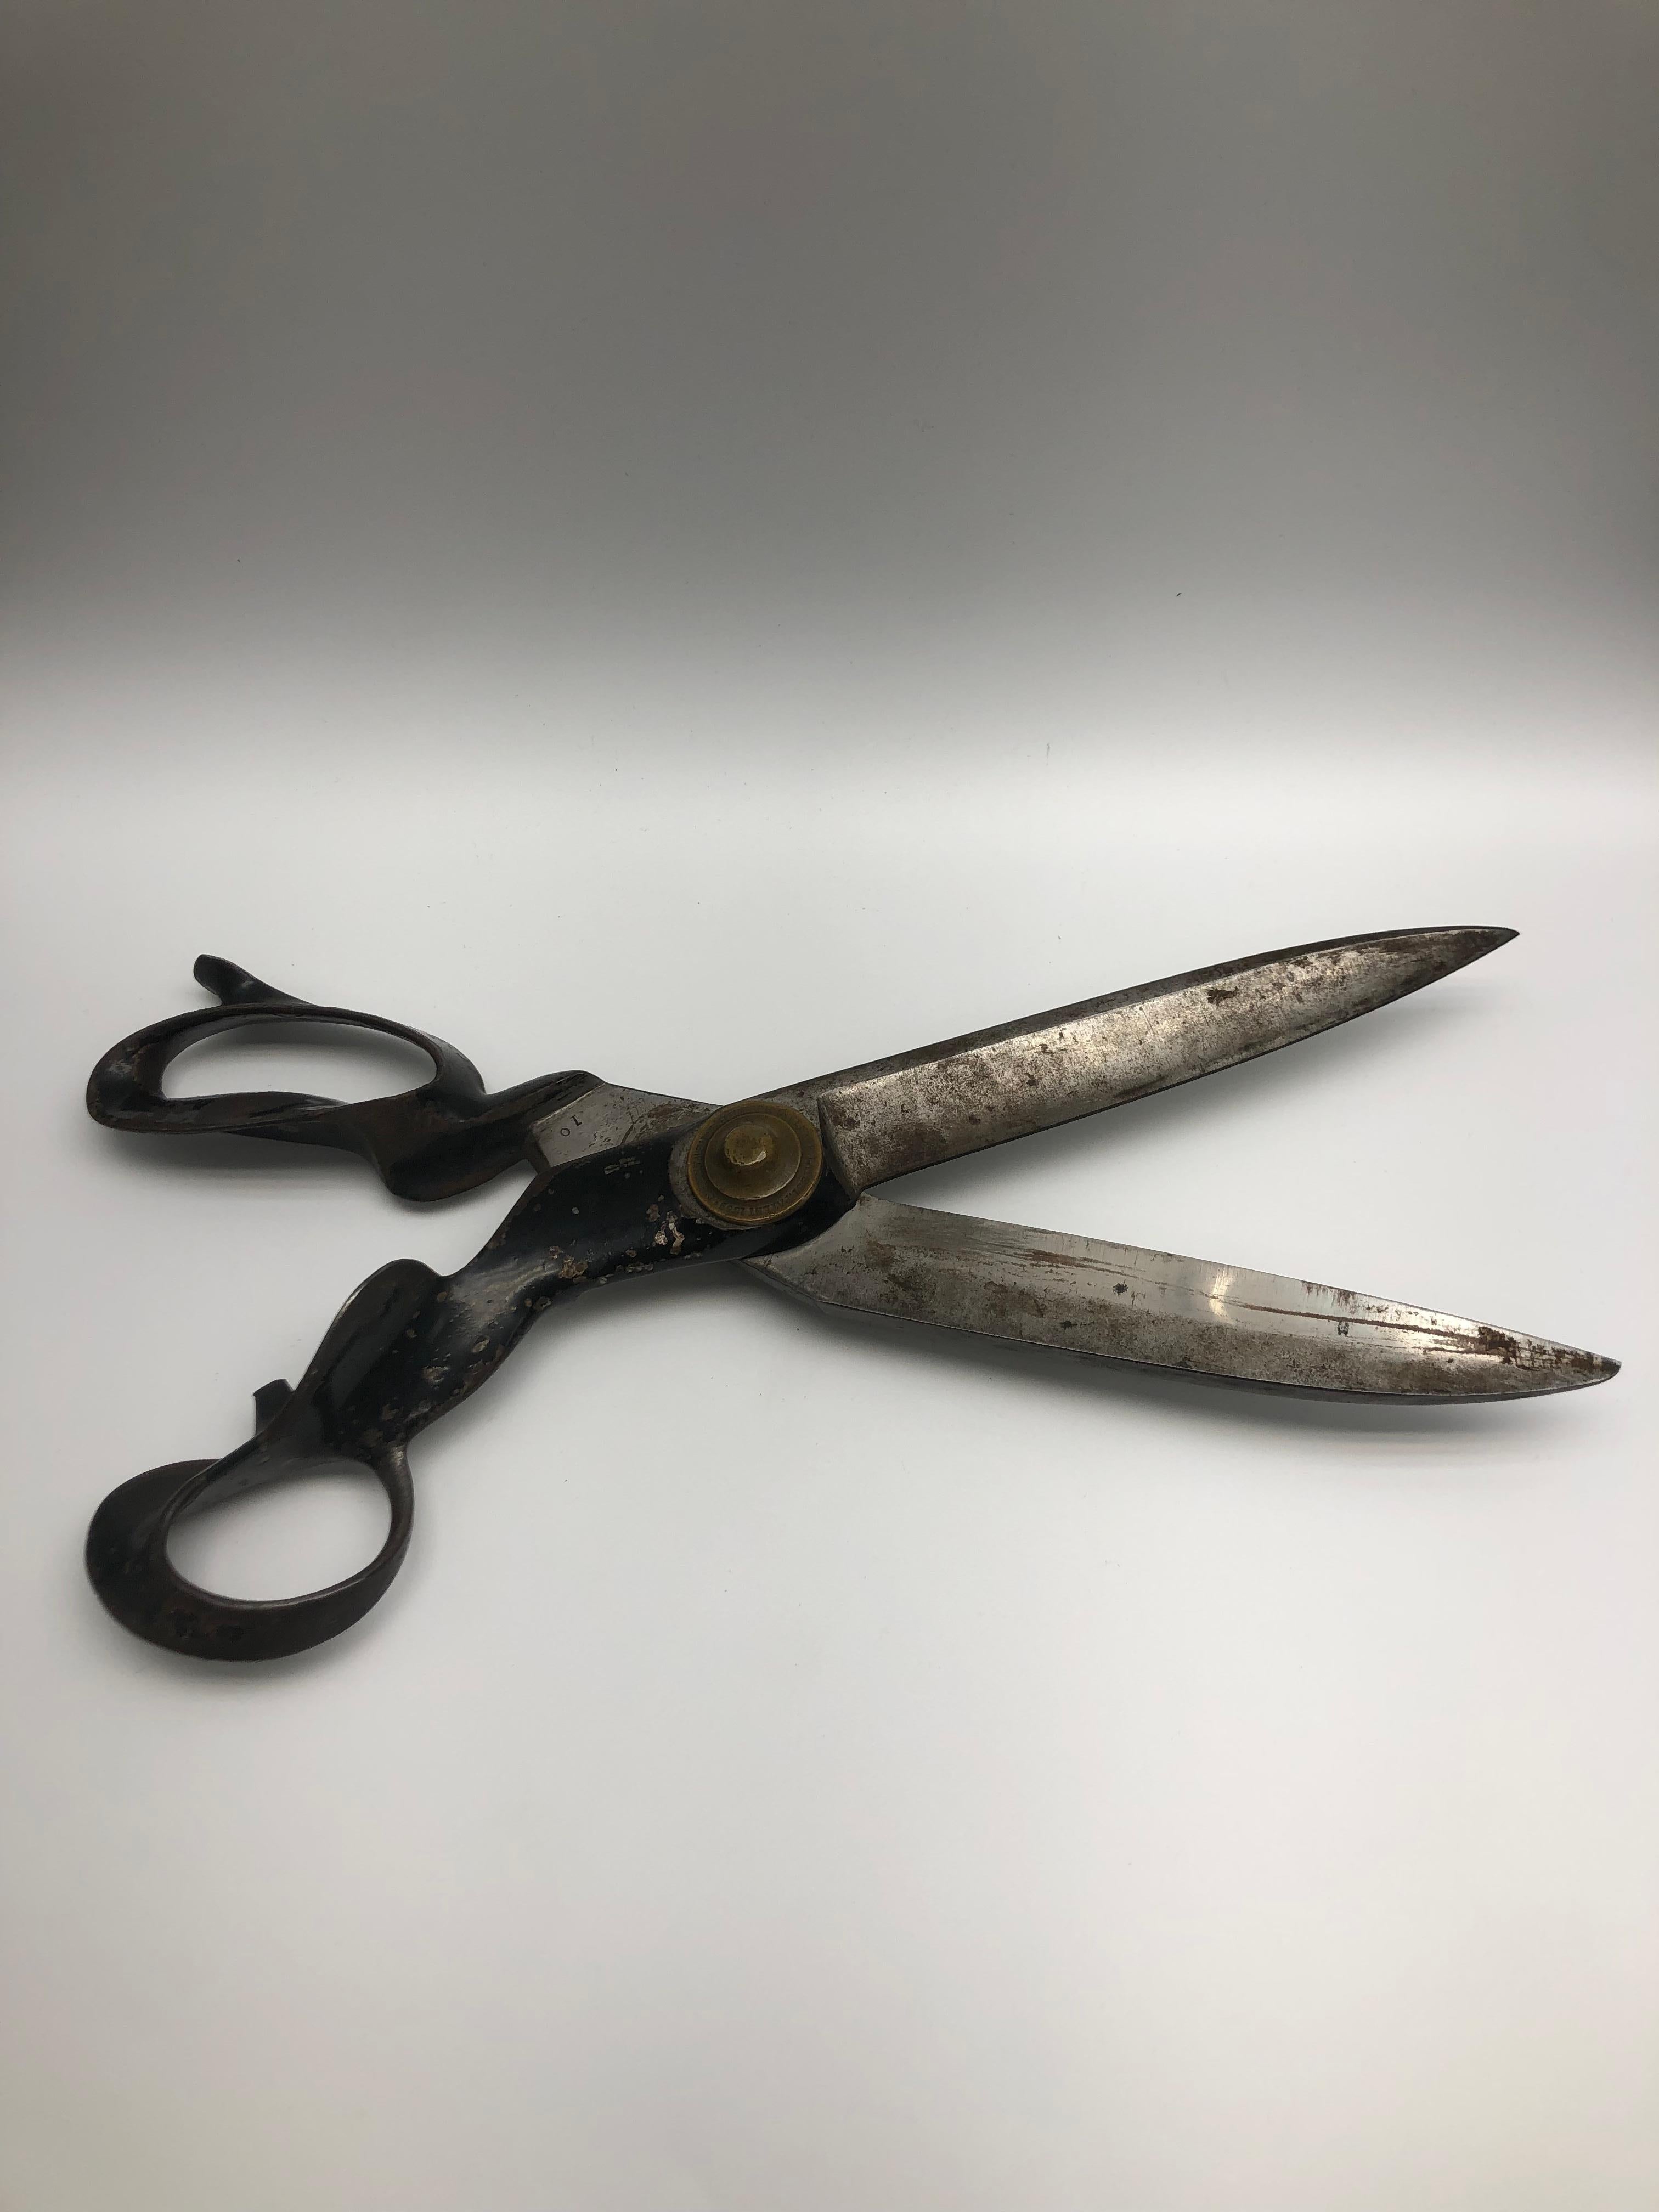 American Antique Mid 19th Century R. Heinisch Furrier Shears, Scissors 1859